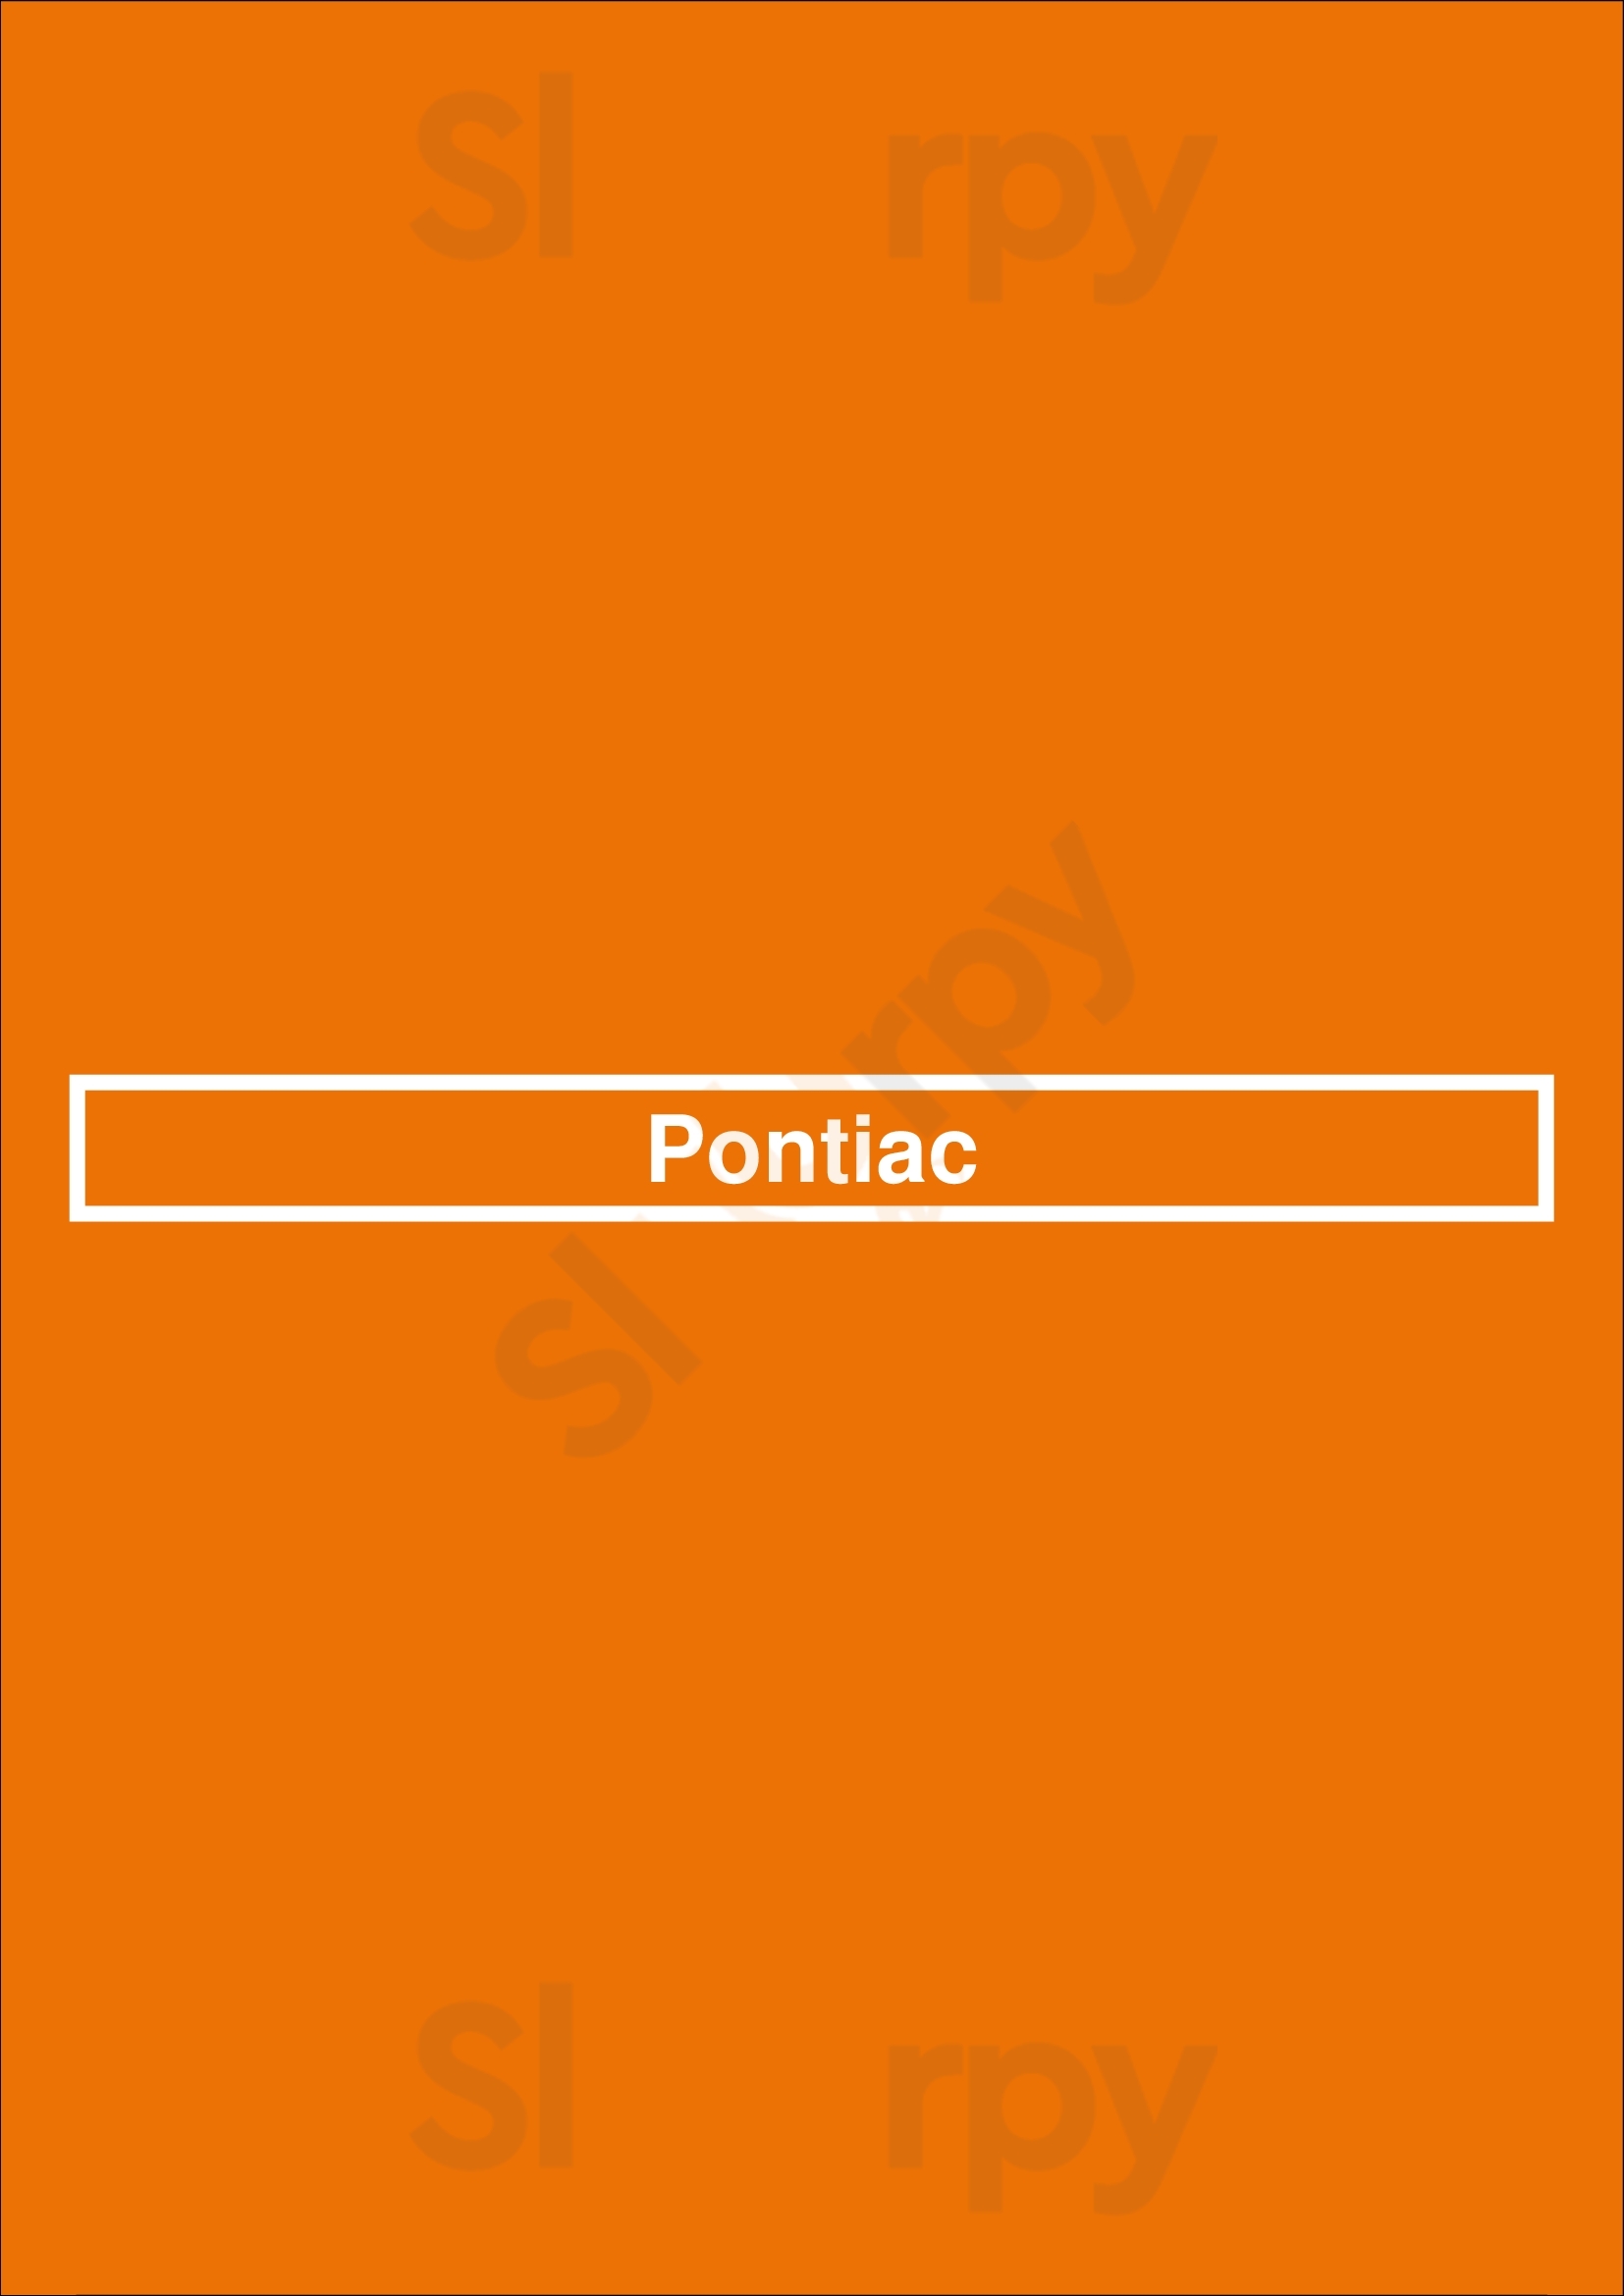 Pontiac Cincinnati Menu - 1